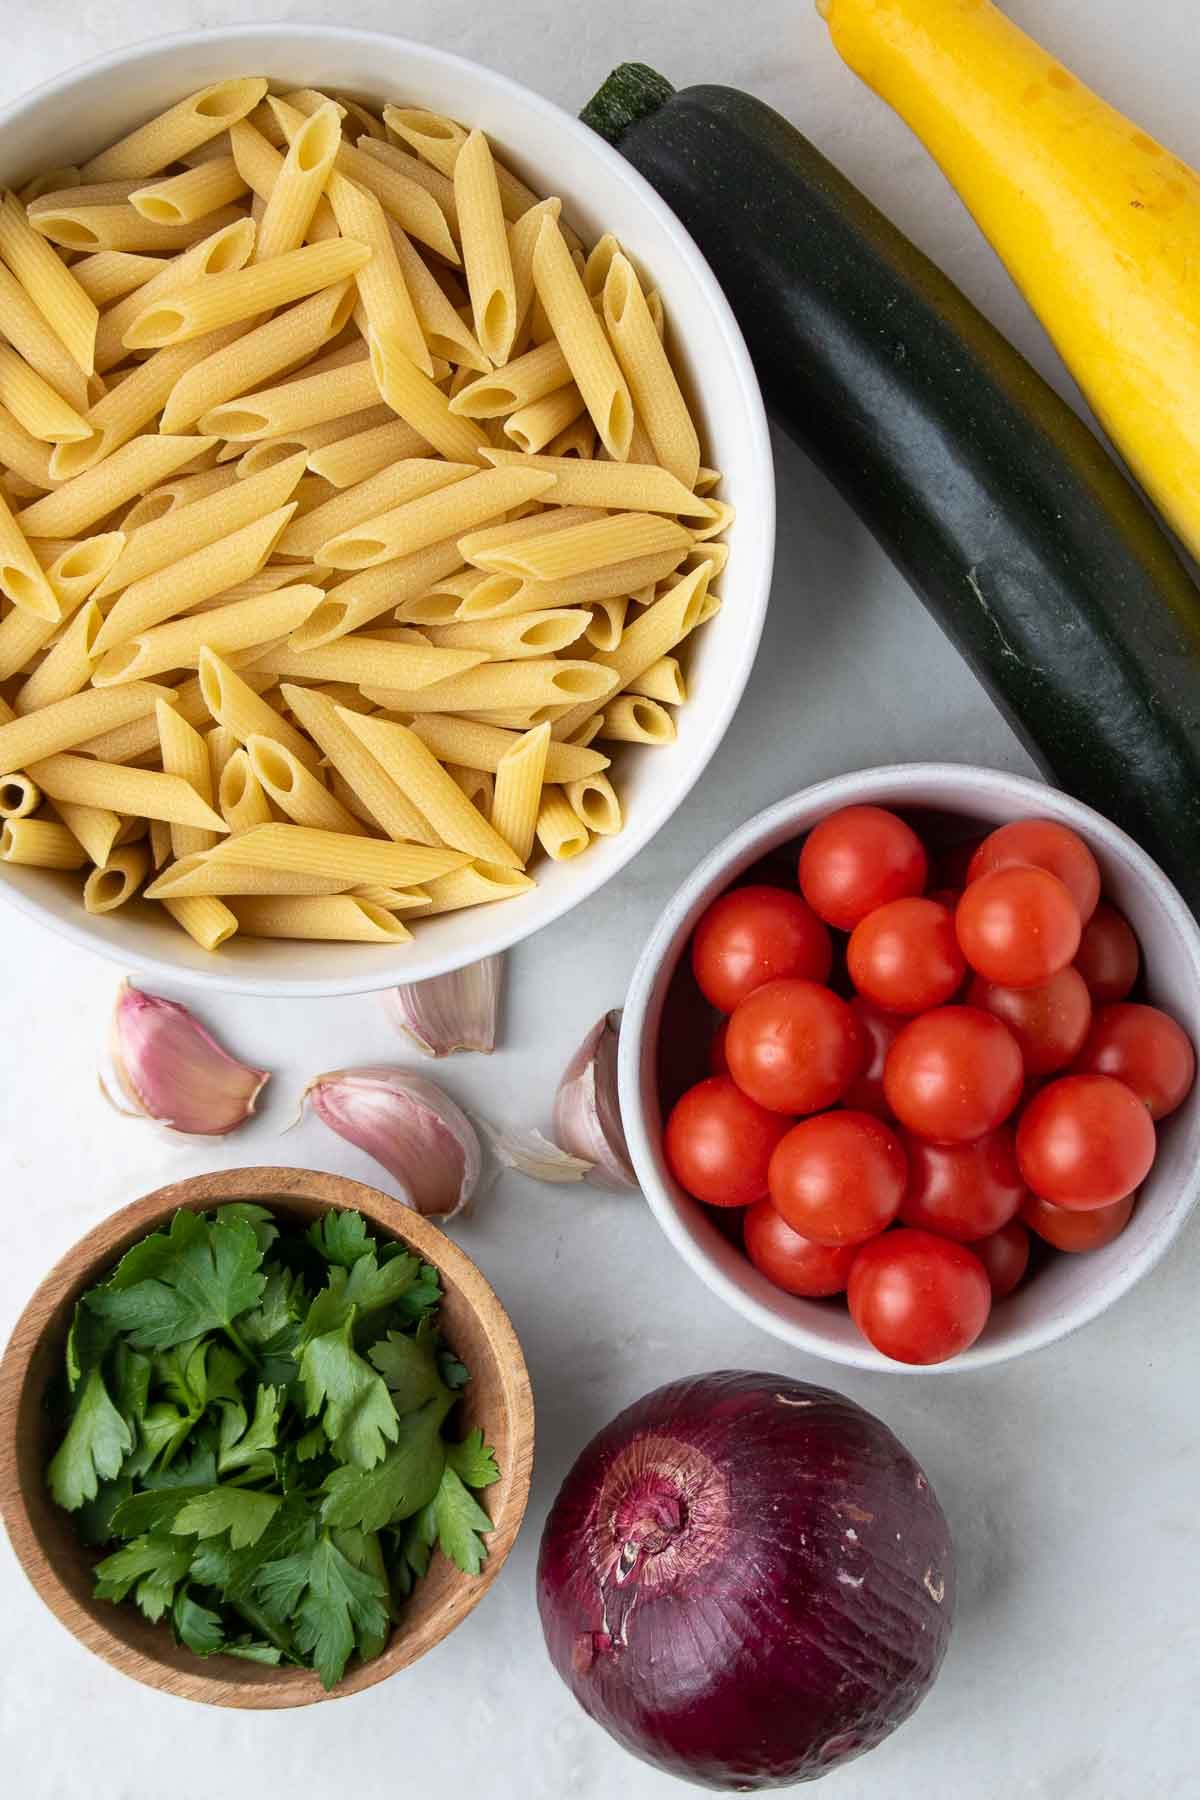 Ingredients for chicken vegetable pasta: penne pasta, green zucchini, yellow zucchini, cherry tomatoes, garlic, red onion, parsley.